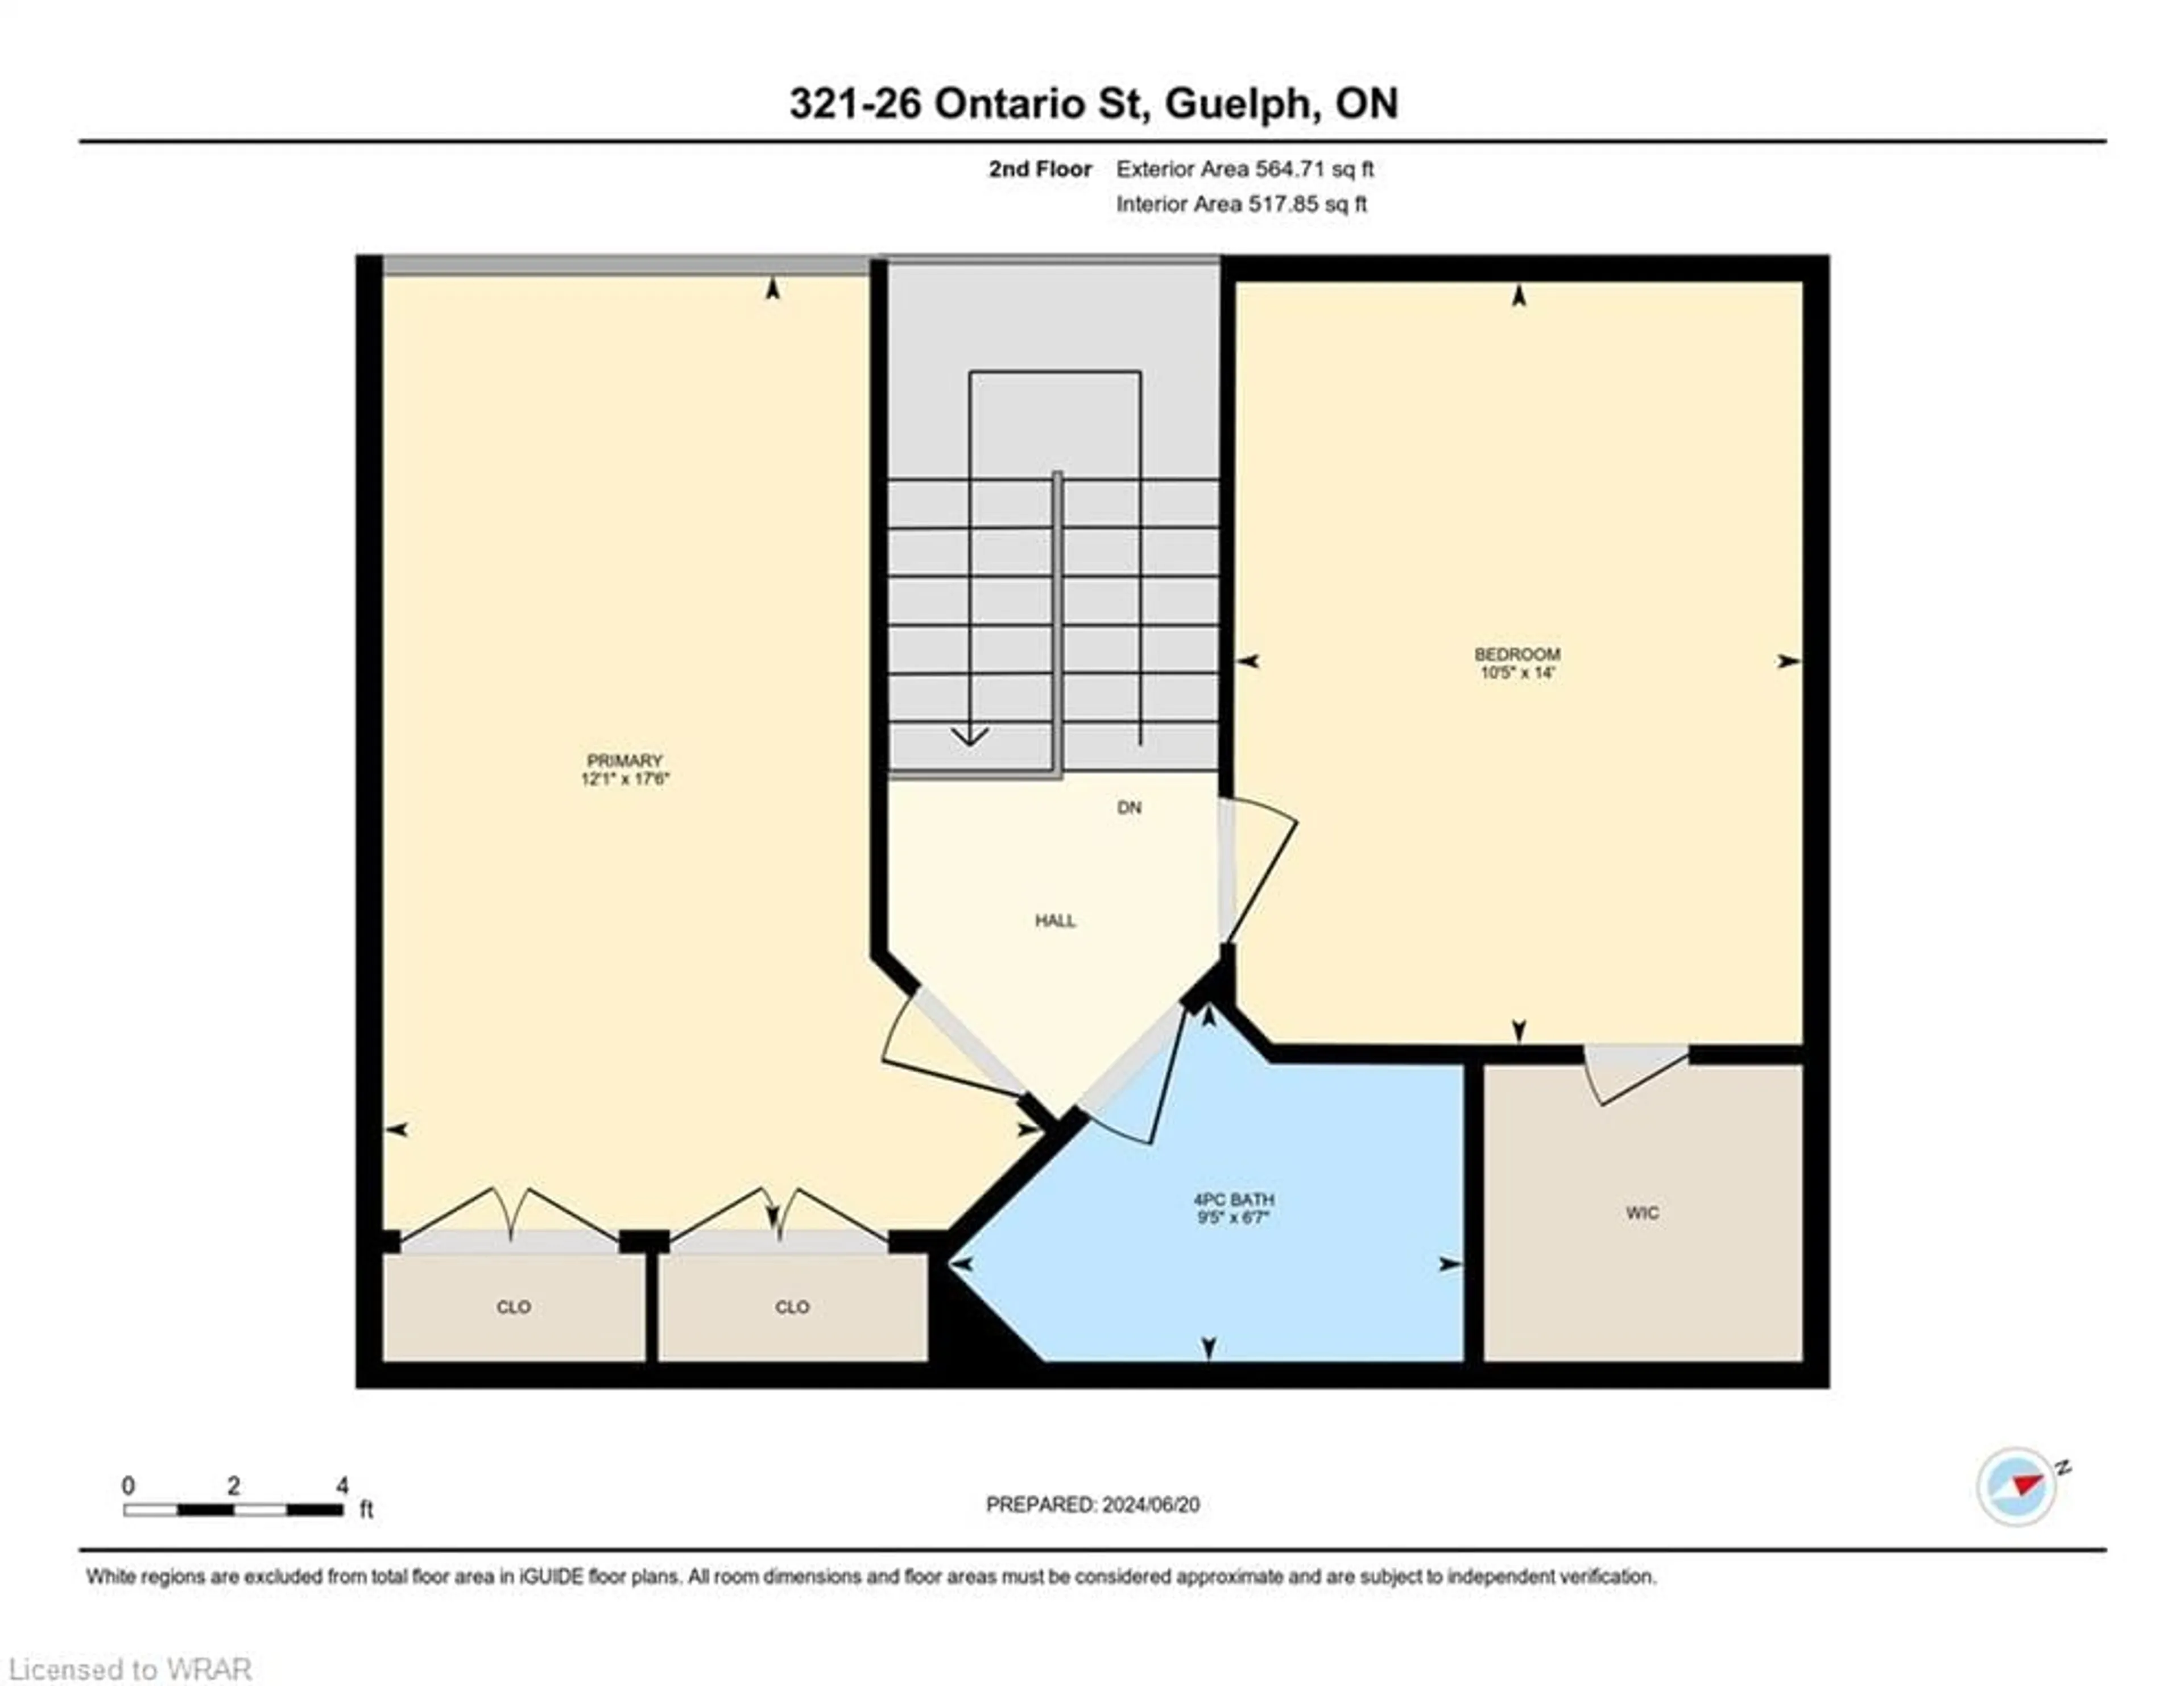 Floor plan for 26 Ontario St #321, Guelph Ontario N1E 7K1